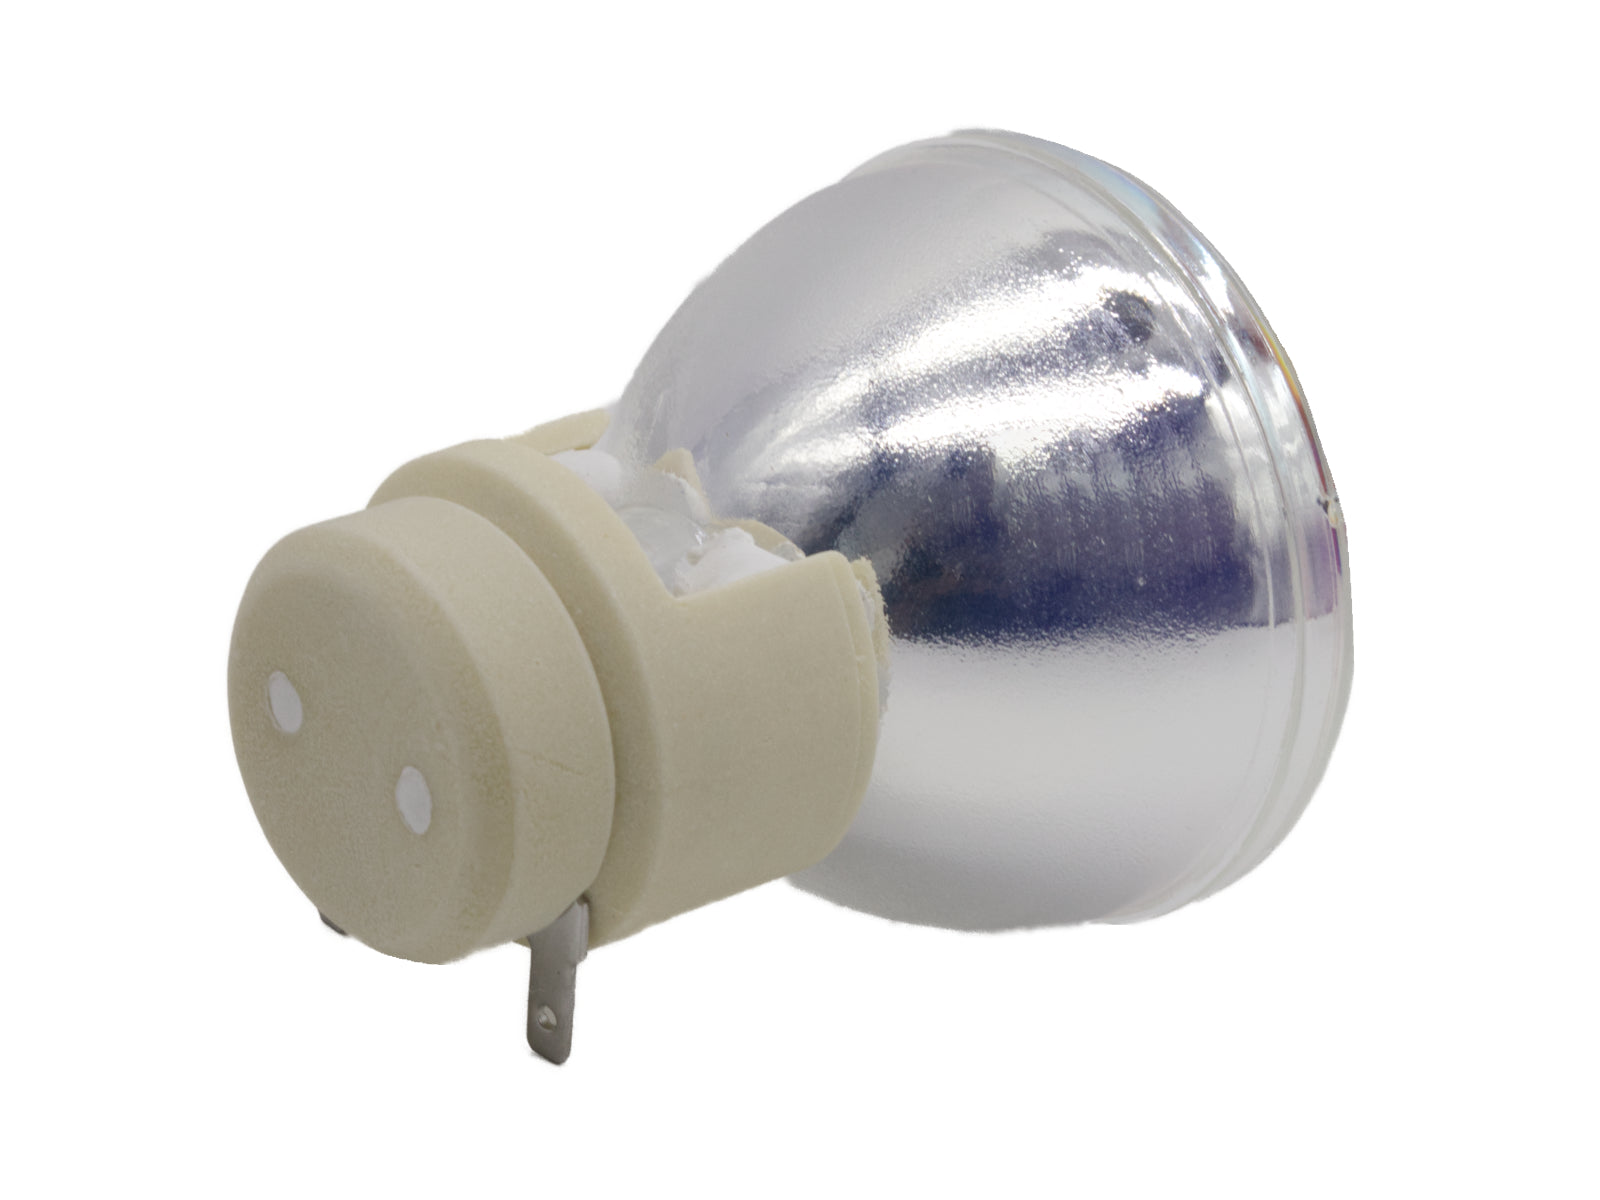 azurano Beamerlampe für ACER MC.JN811.001 Ersatzlampe Projektorlampe - Bild 4